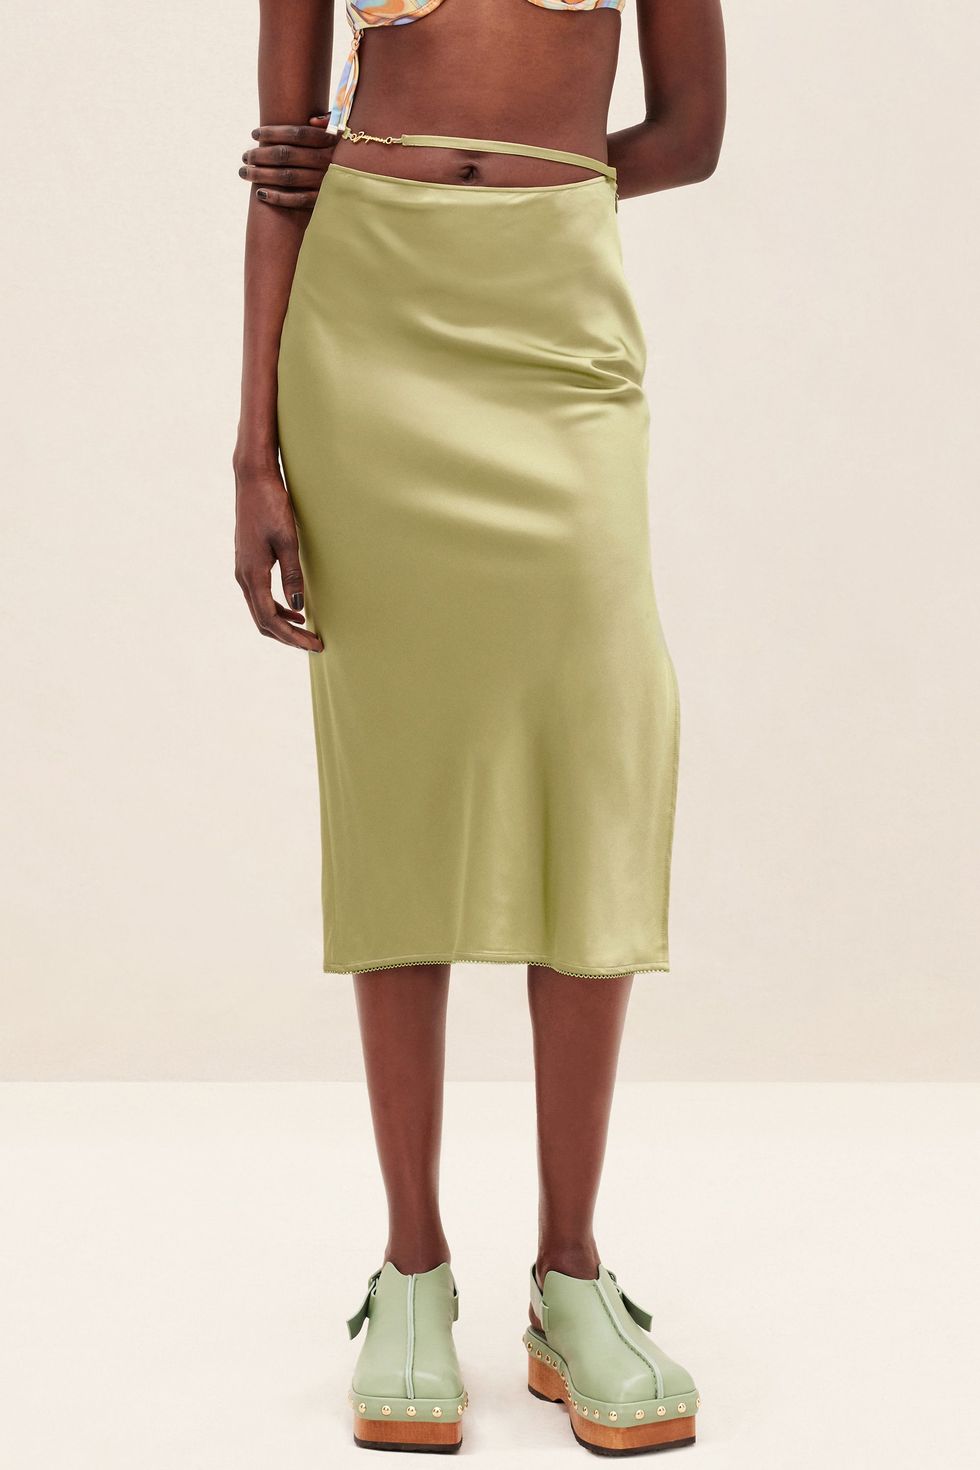 State Fair Olive Green Denim Mini Skirt